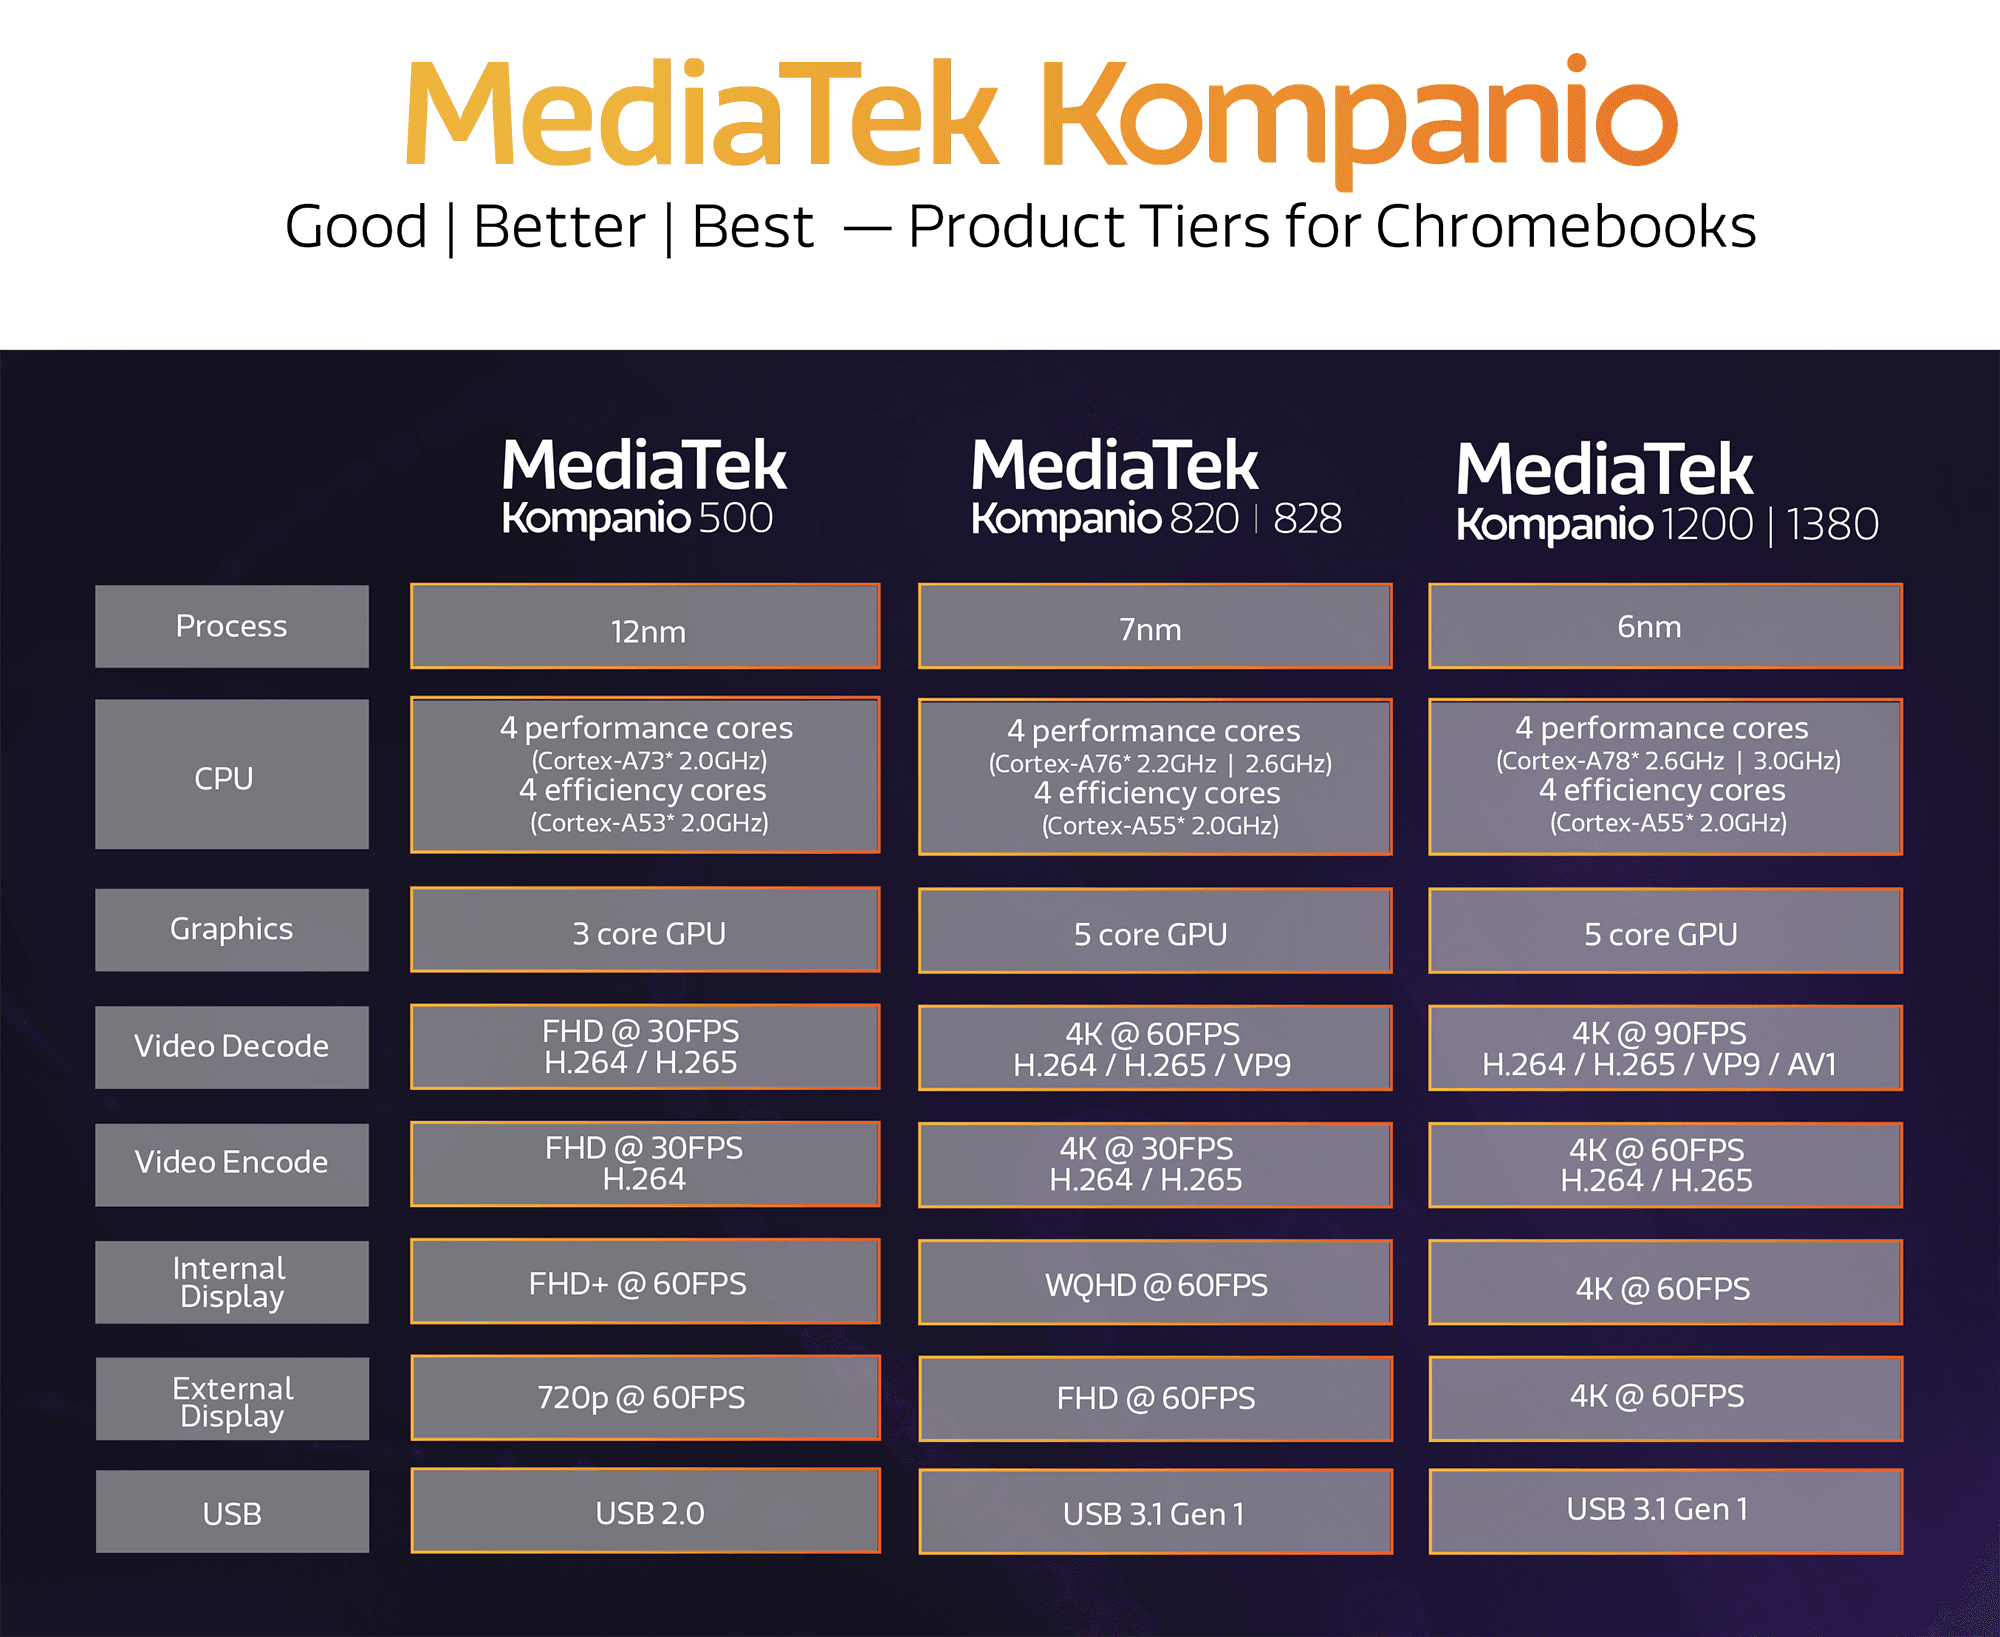 MediaTek Kompanio: Which chip is best for me?